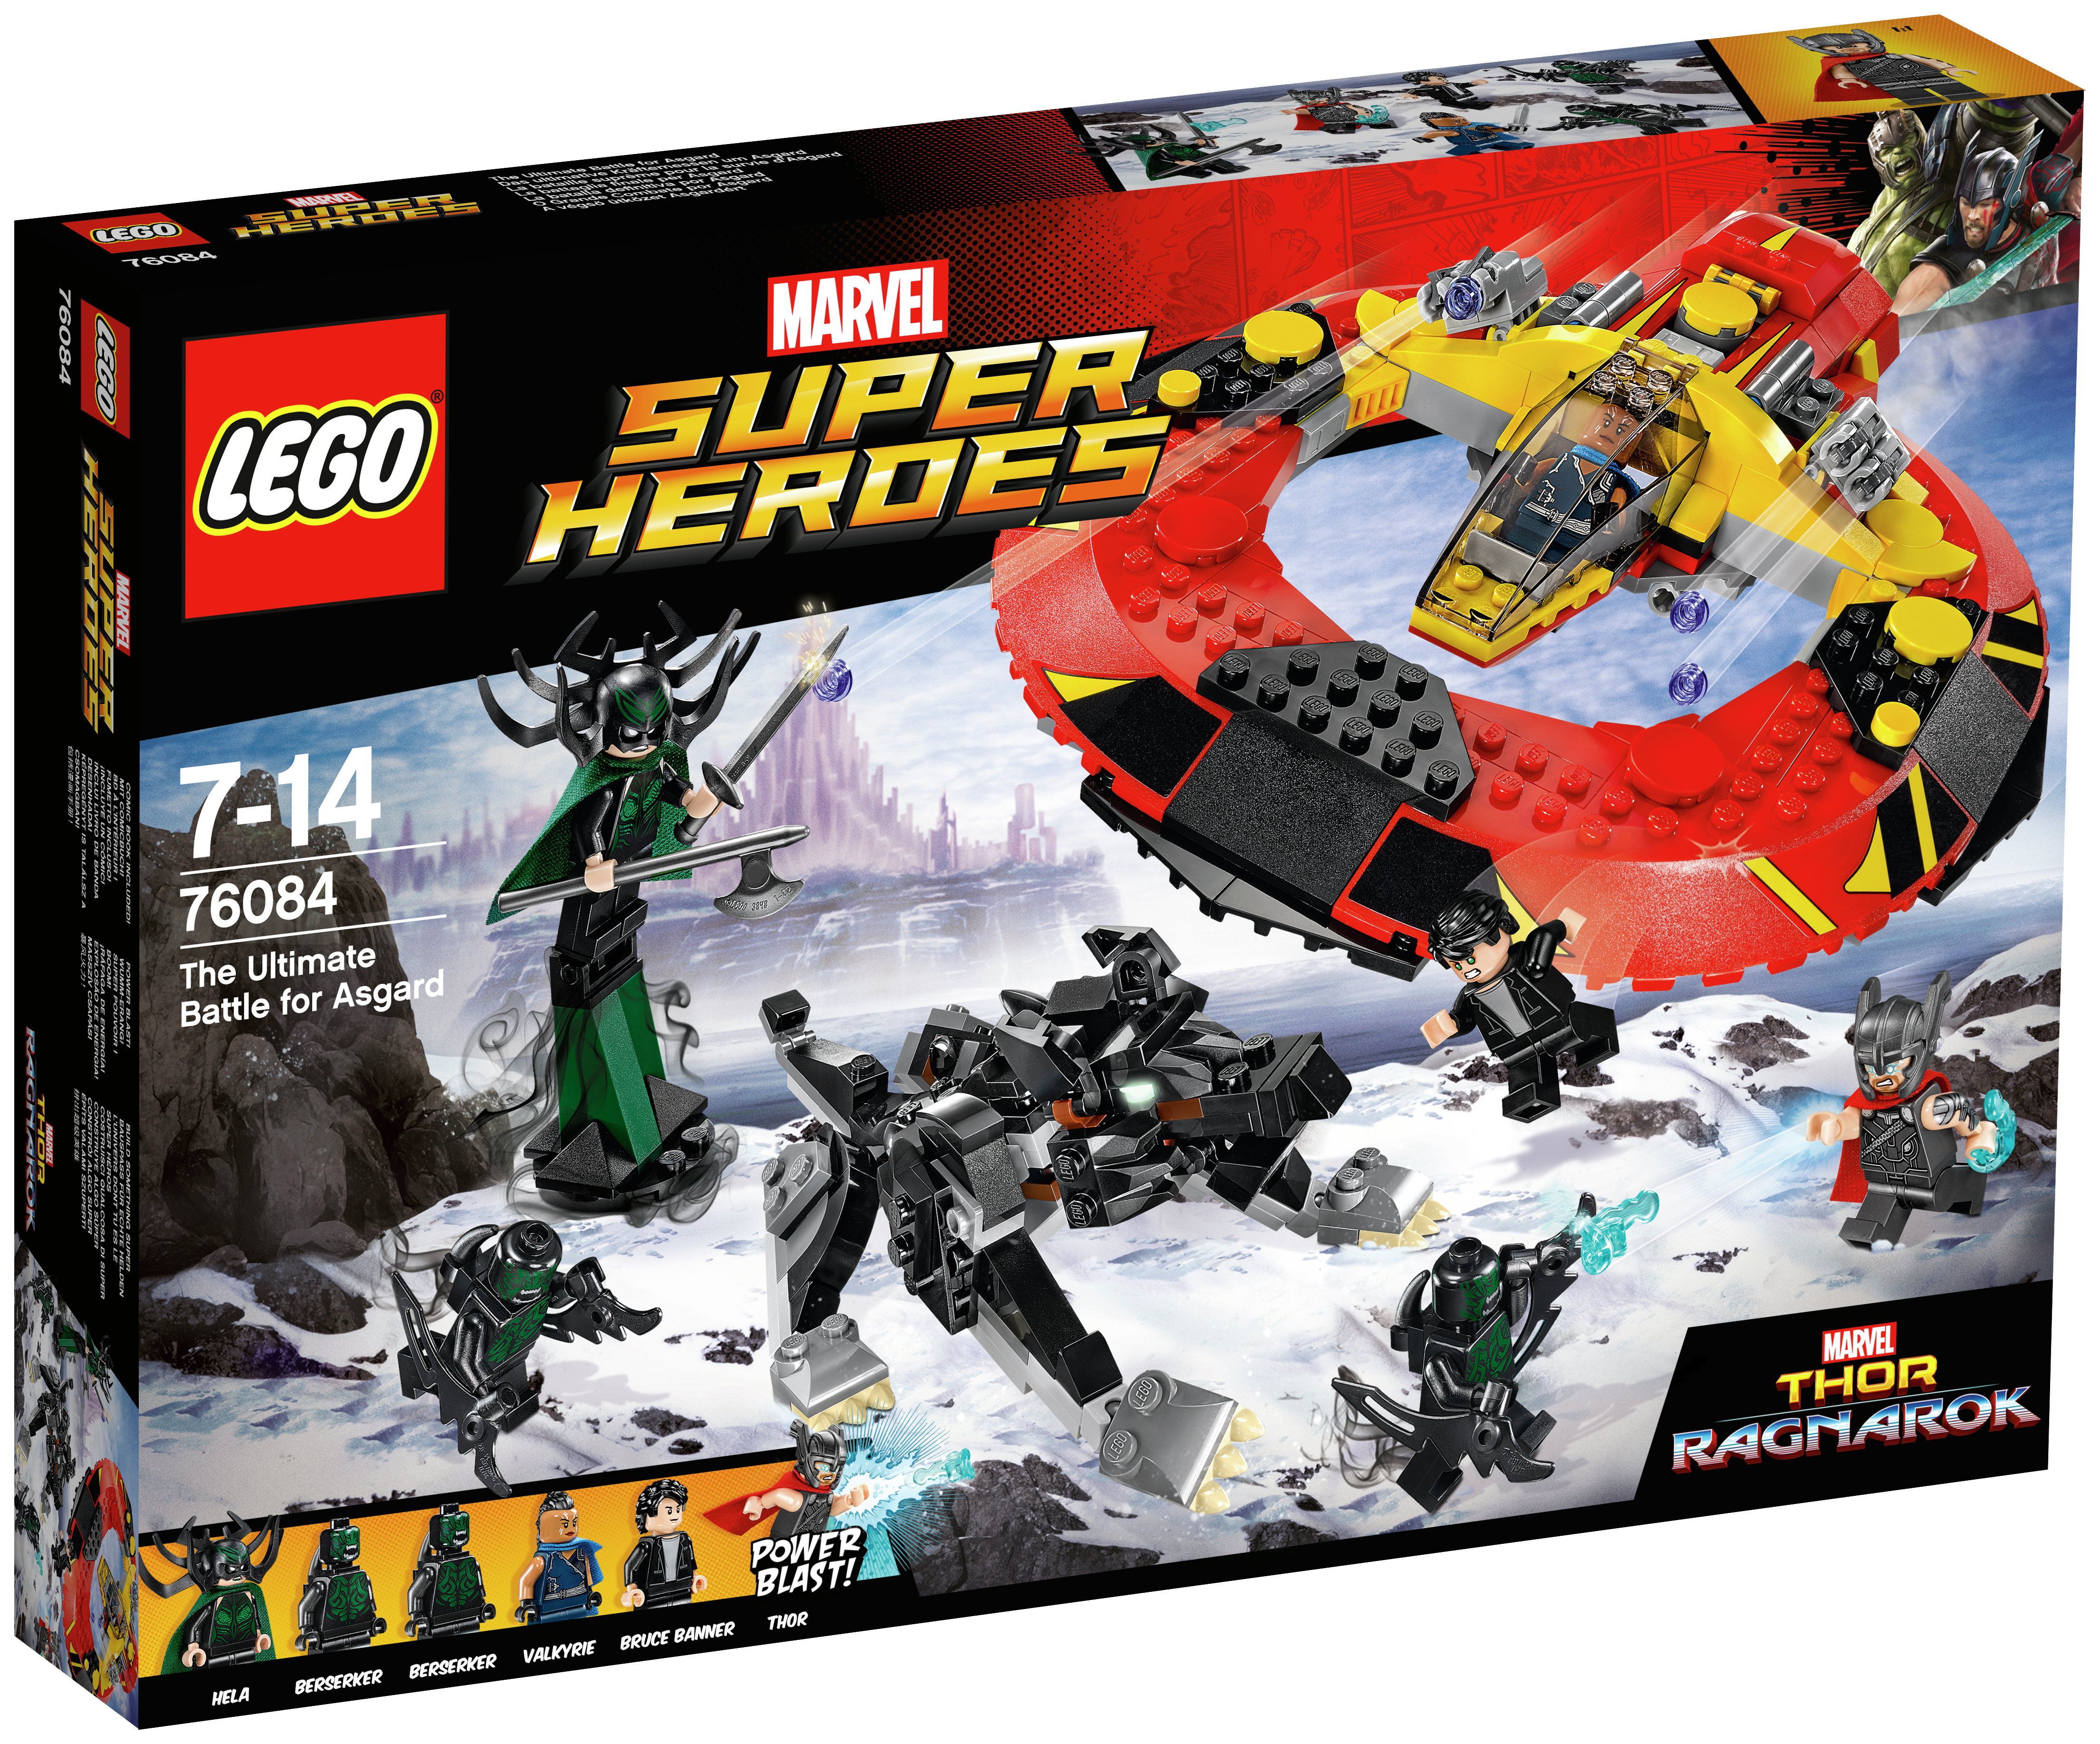 LEGO Marvel Super Heroes Thor Commodore Ship - 76084